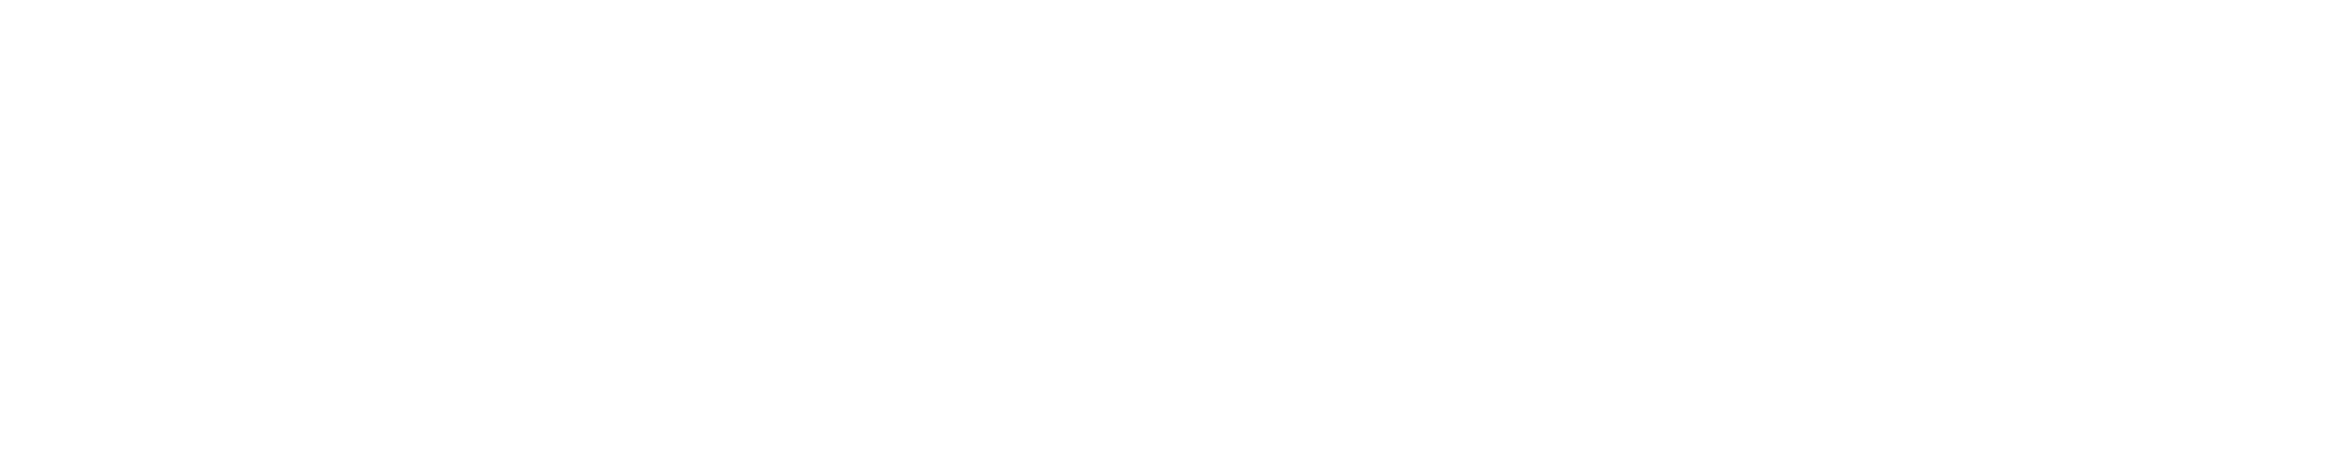 logo absolute - navetta 70